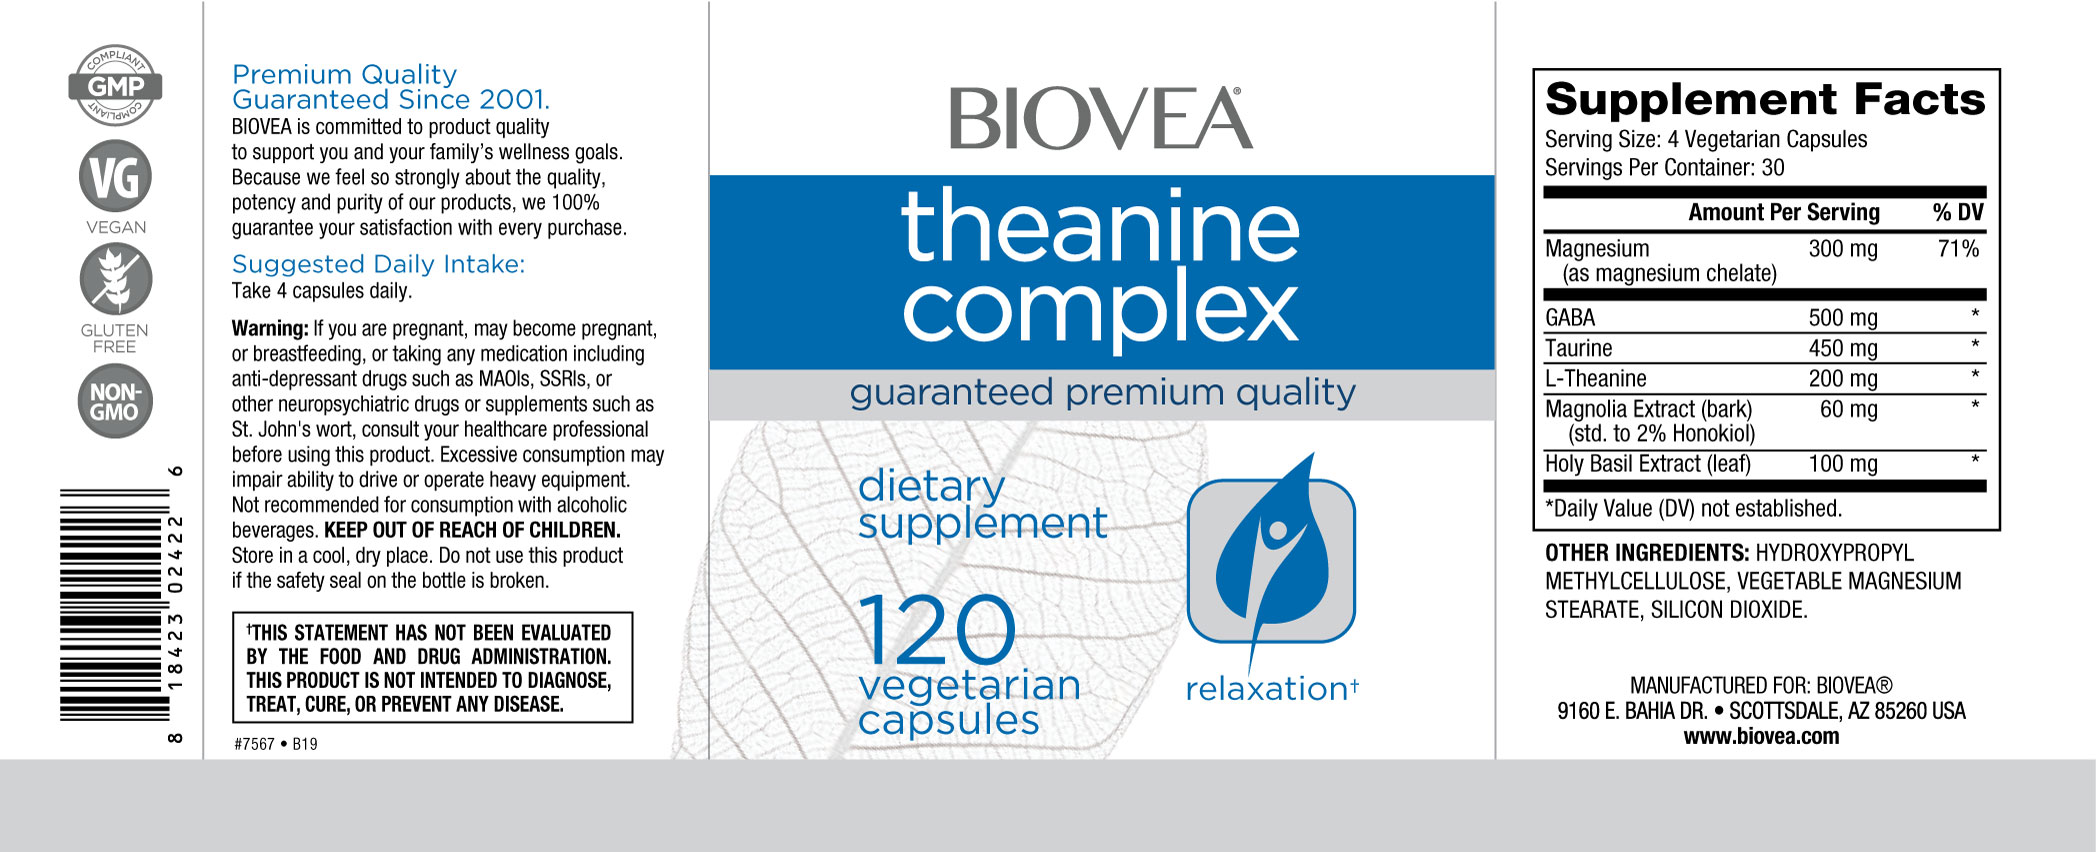 BIOVEA THEANINE COMPLEX / 120 Vegetarian Capsules